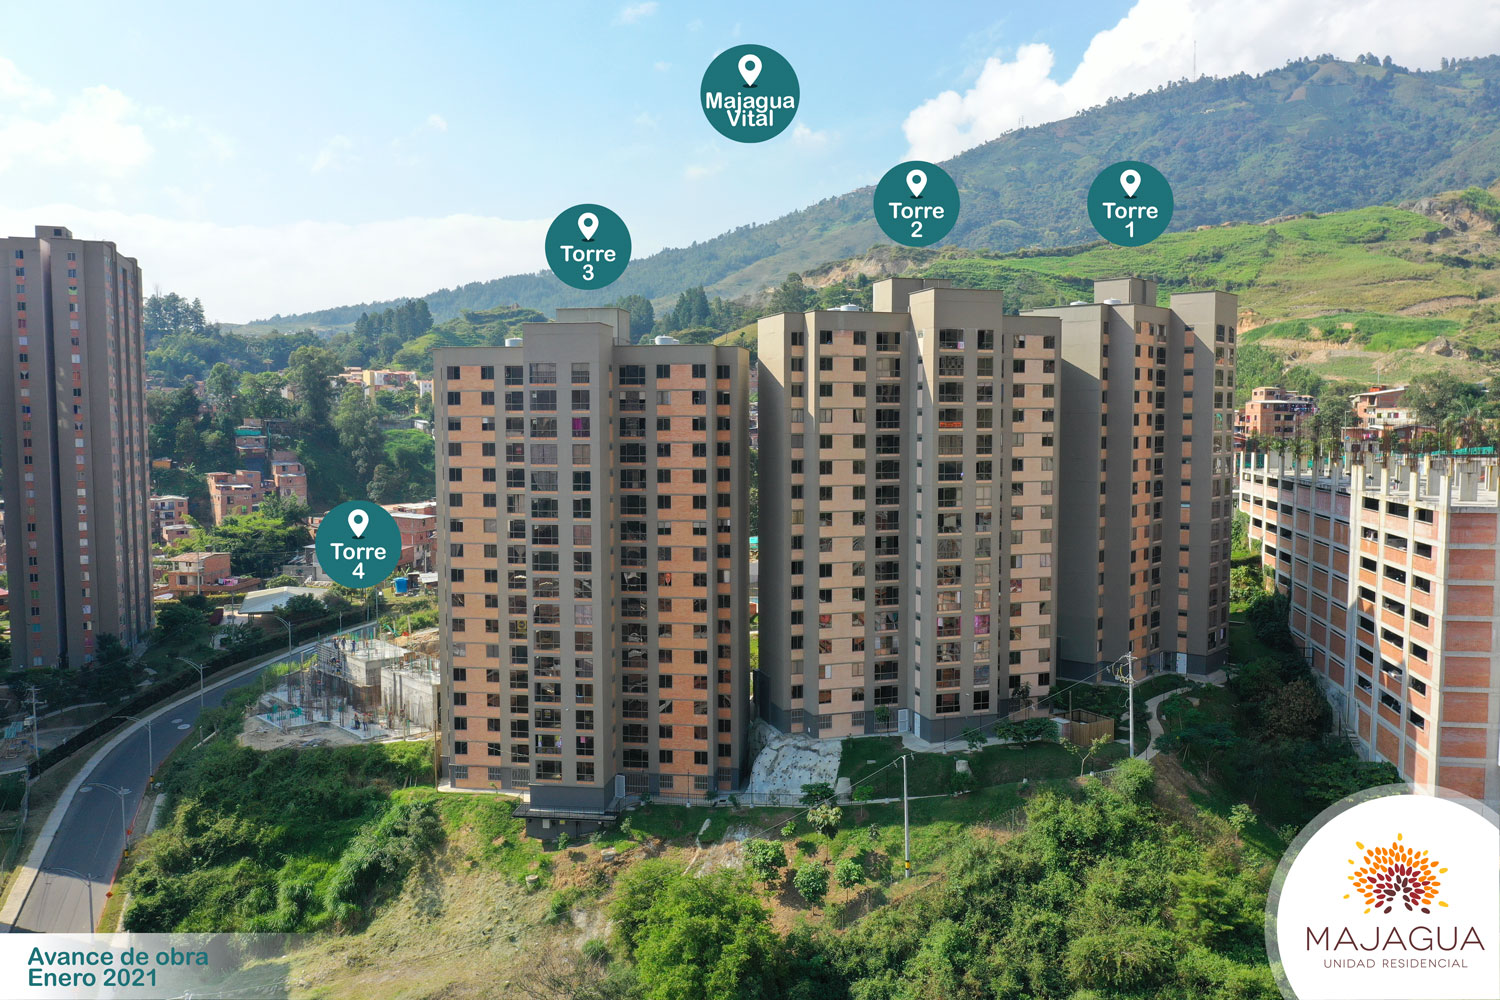 Avance de obra Majagua - Majagua, Venta de Apartamentos y Apartaestudios en Bello, Antioquia